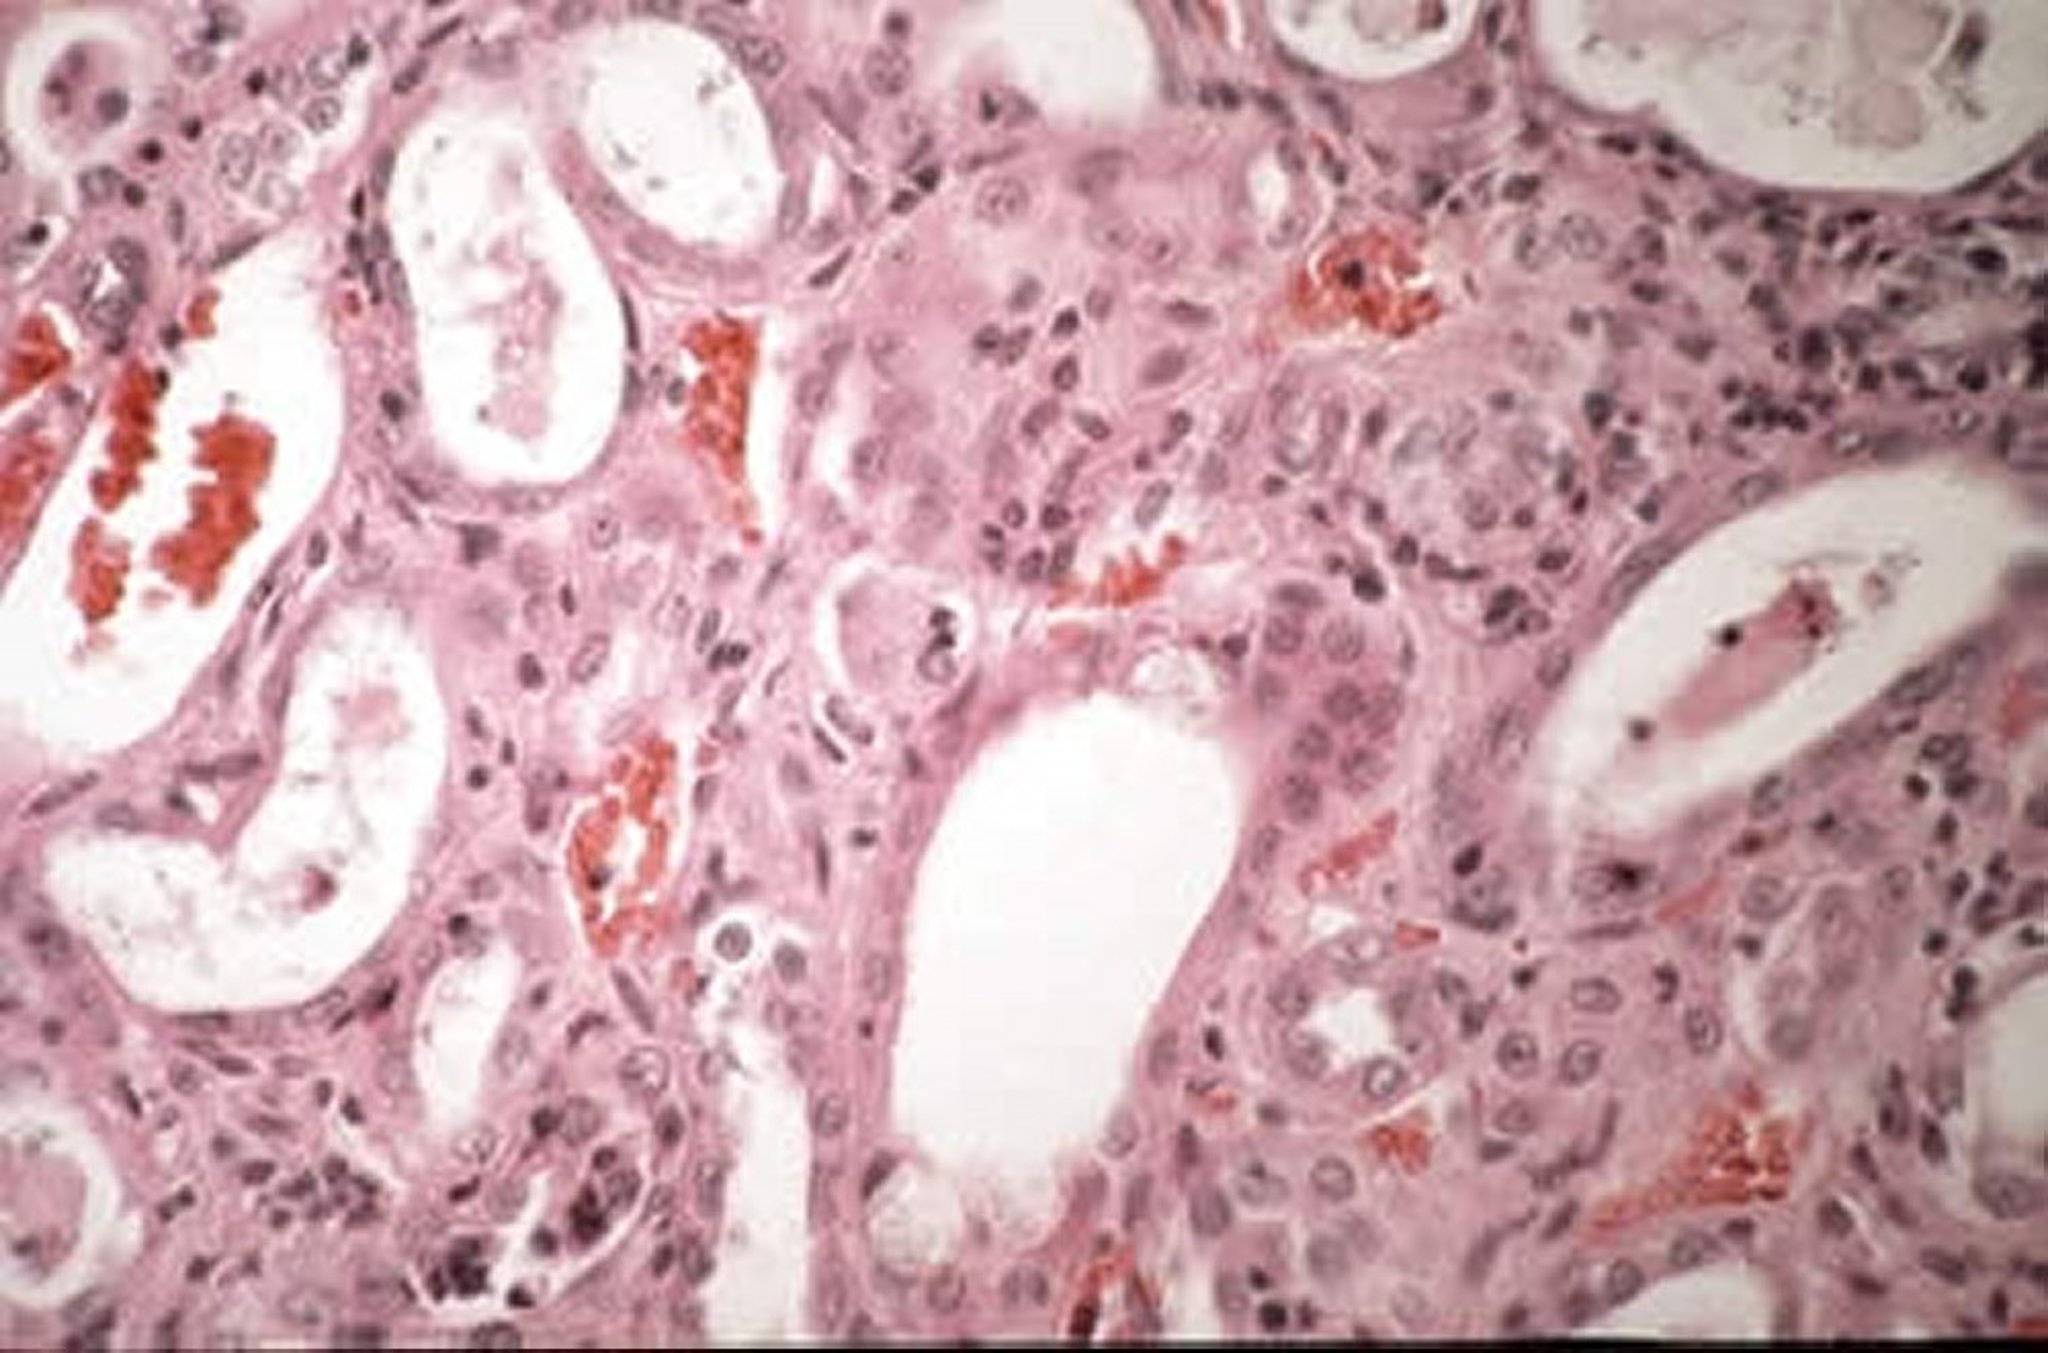 Intracellular cysts of <i >Encephalitozoon cuniculi</i>, renal cells, rabbit